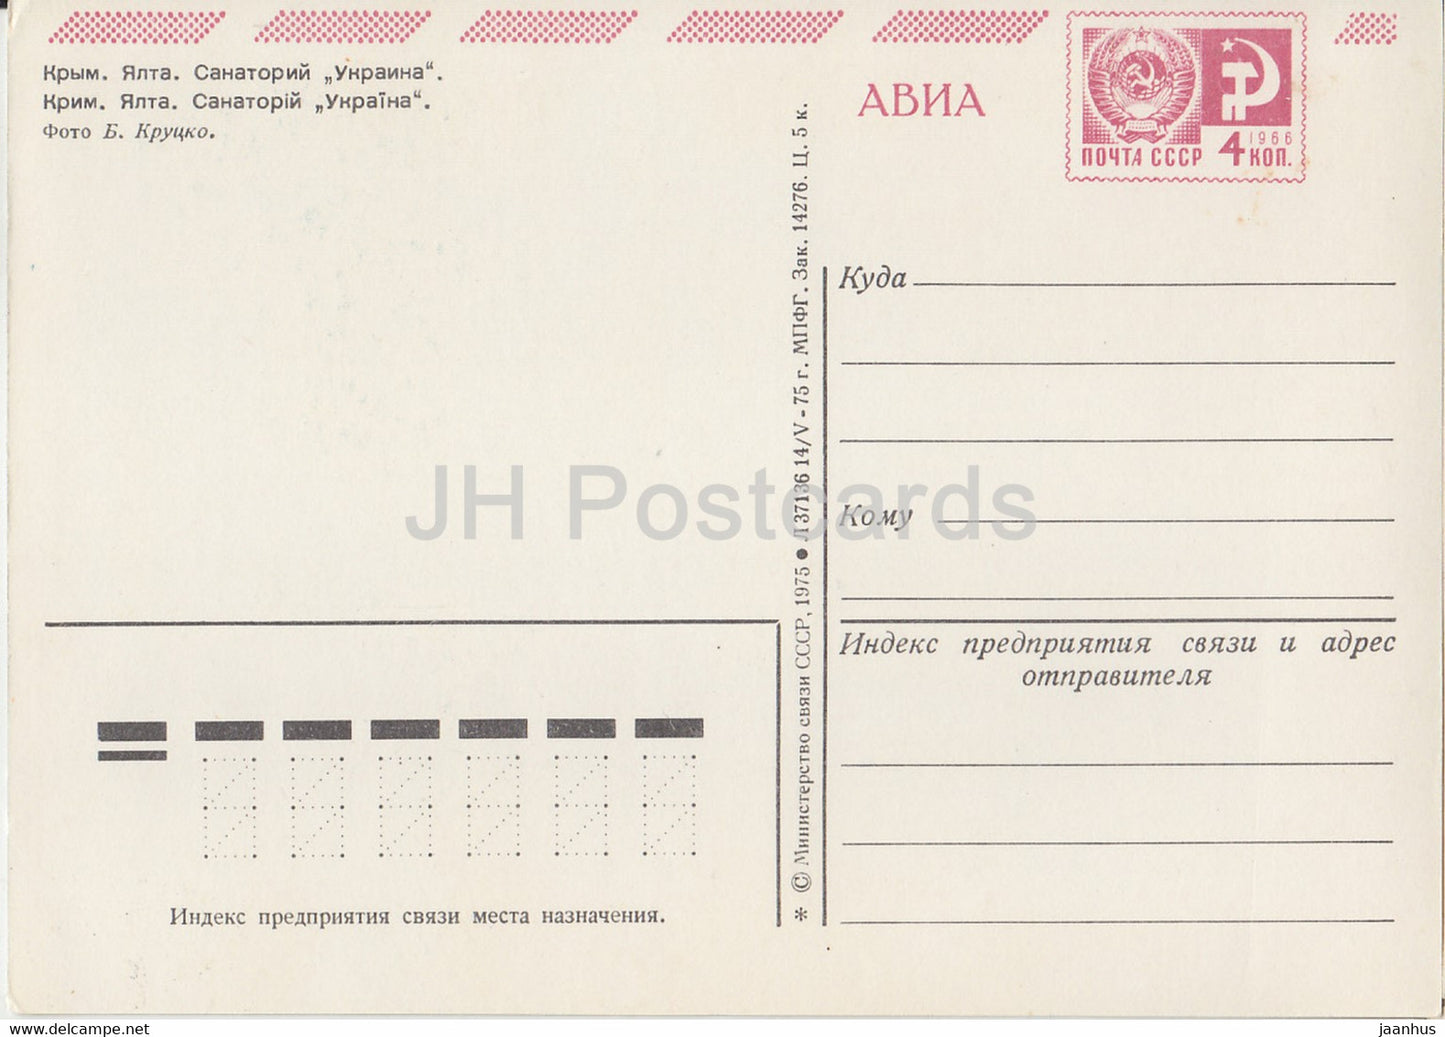 Crimea - Yalta - sanatorium Ukraina - AVIA - postal stationery - 1975 - Ukraine USSR - unused